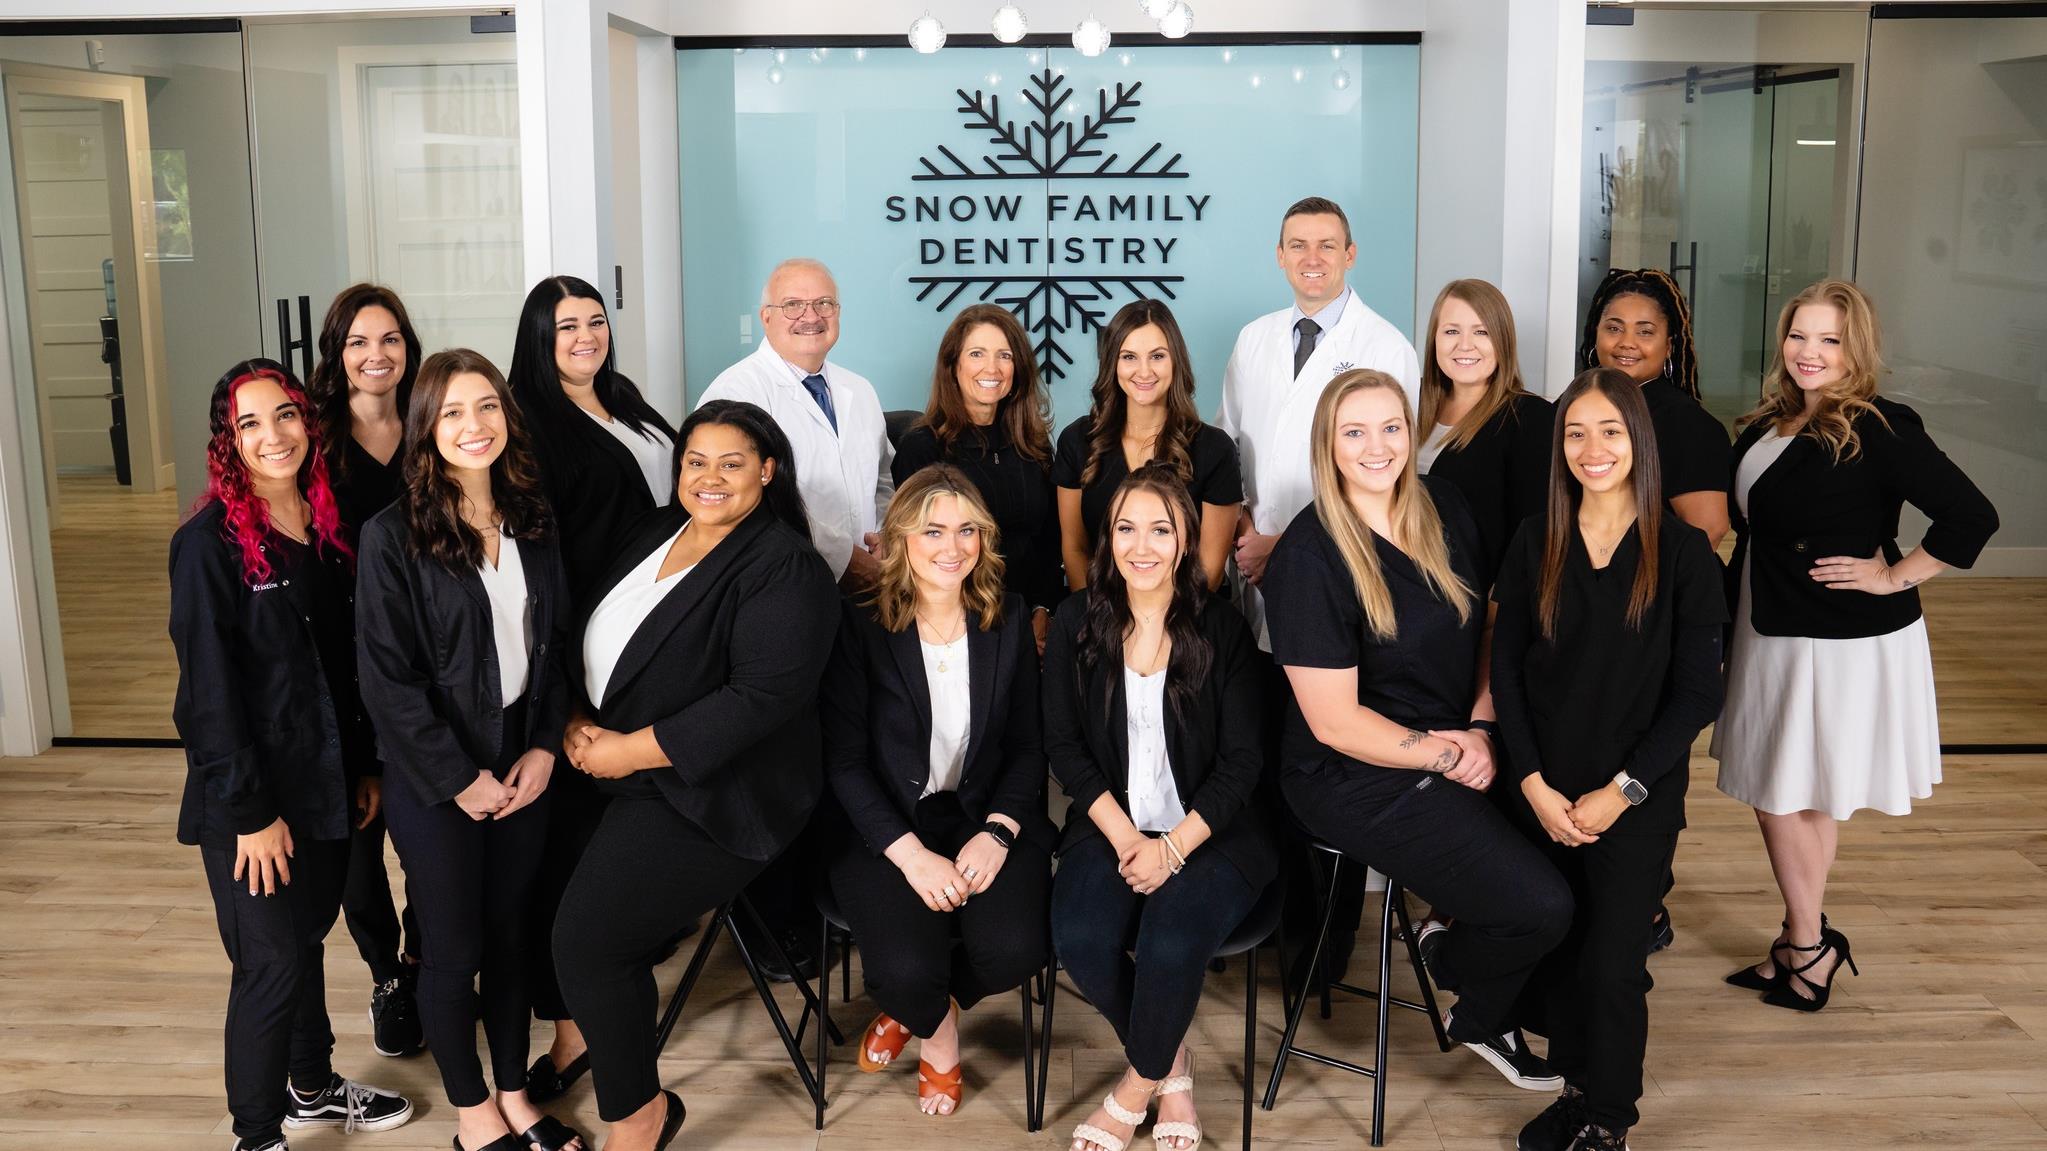 Snow Family Dentistry/Dentists                                                                                                                                                                                                